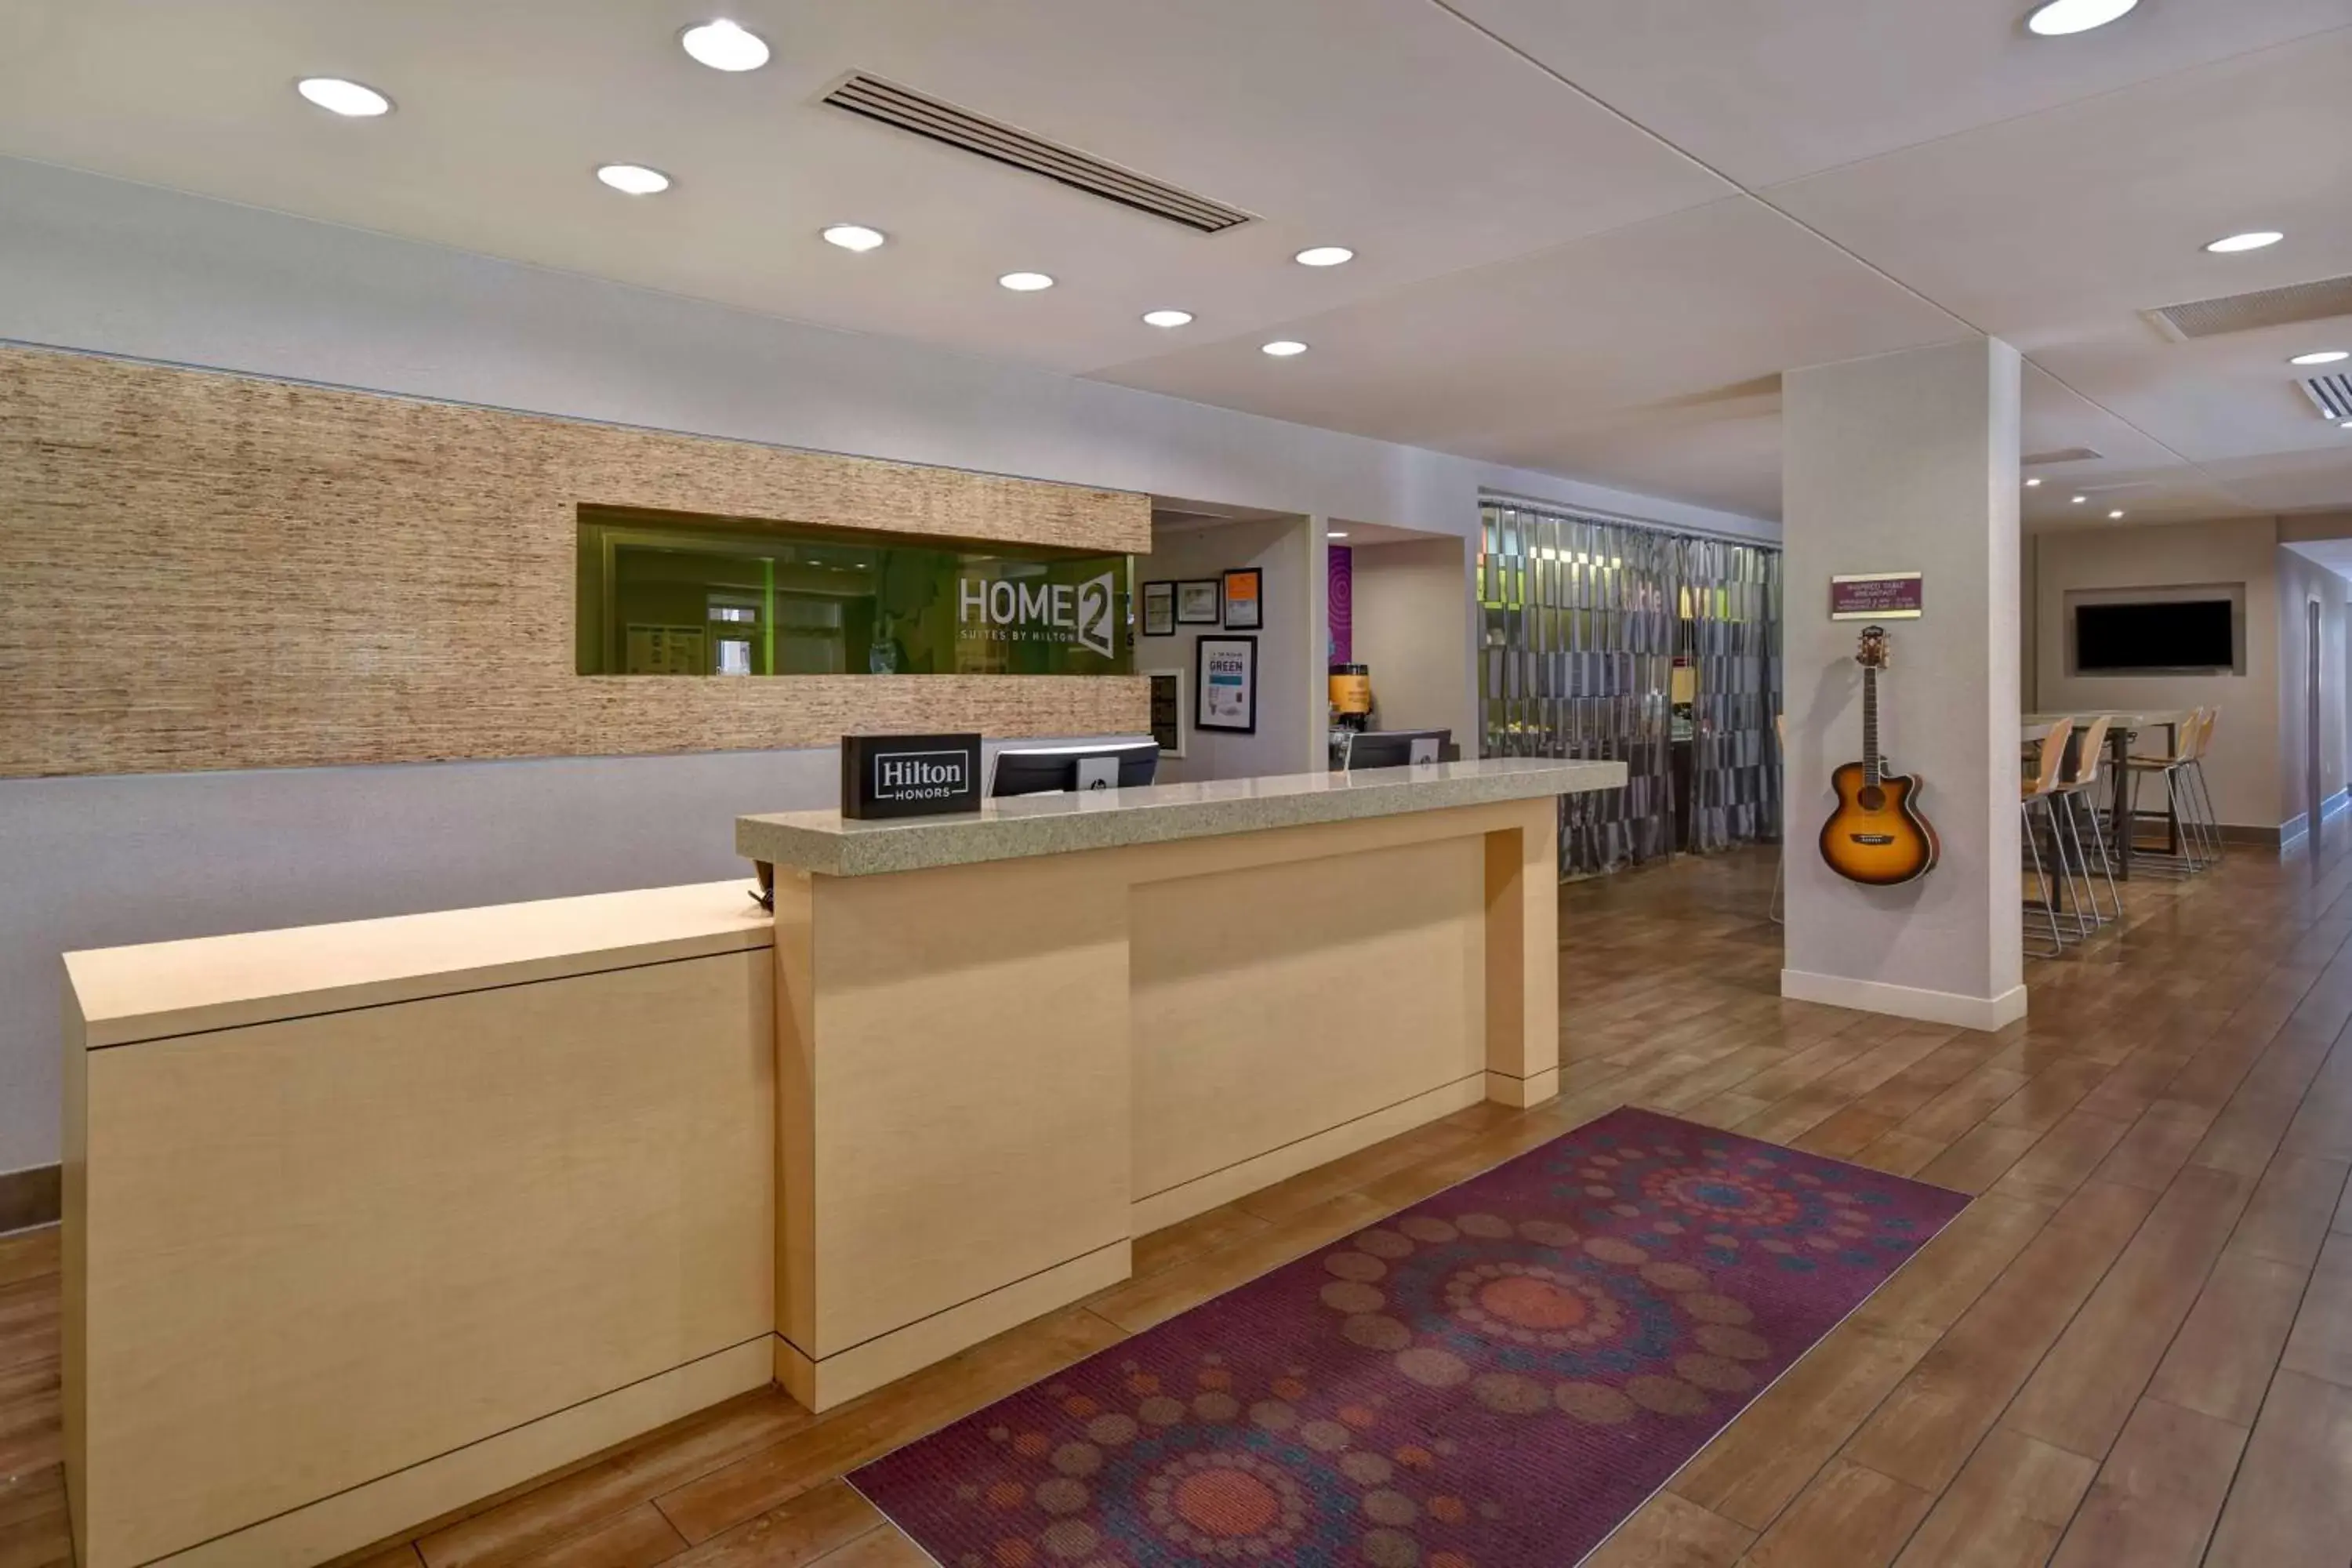 Lobby or reception, Lobby/Reception in Home2 Suites by Hilton Nashville Vanderbilt, TN